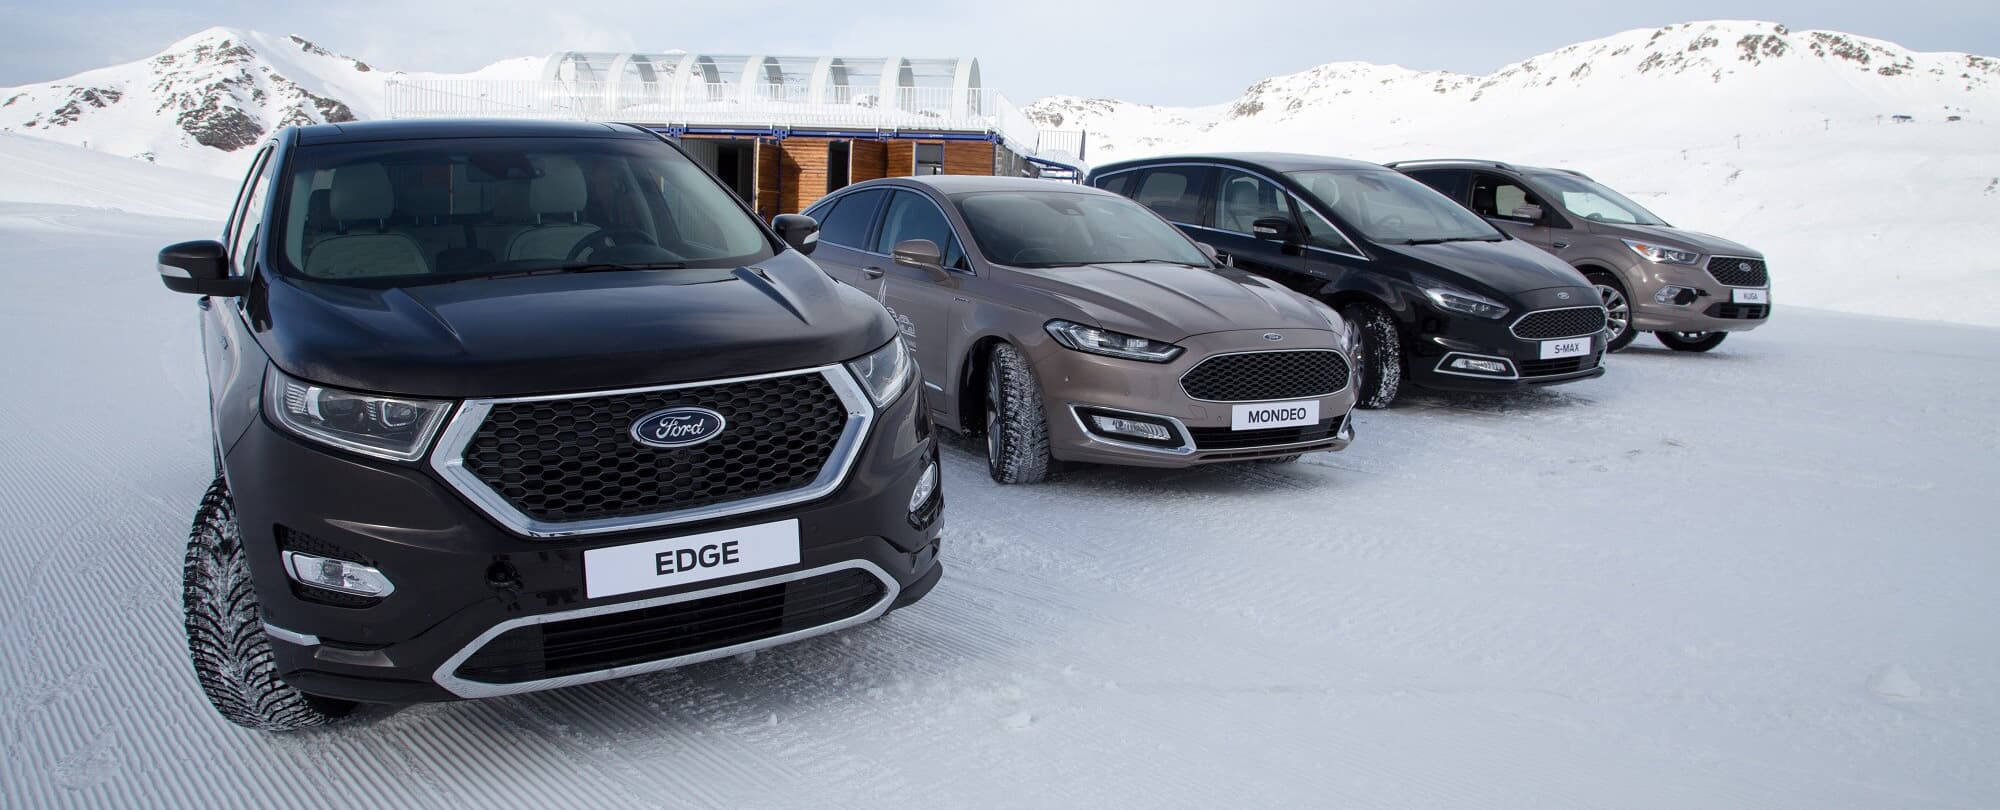 gama coches ford en la nieve